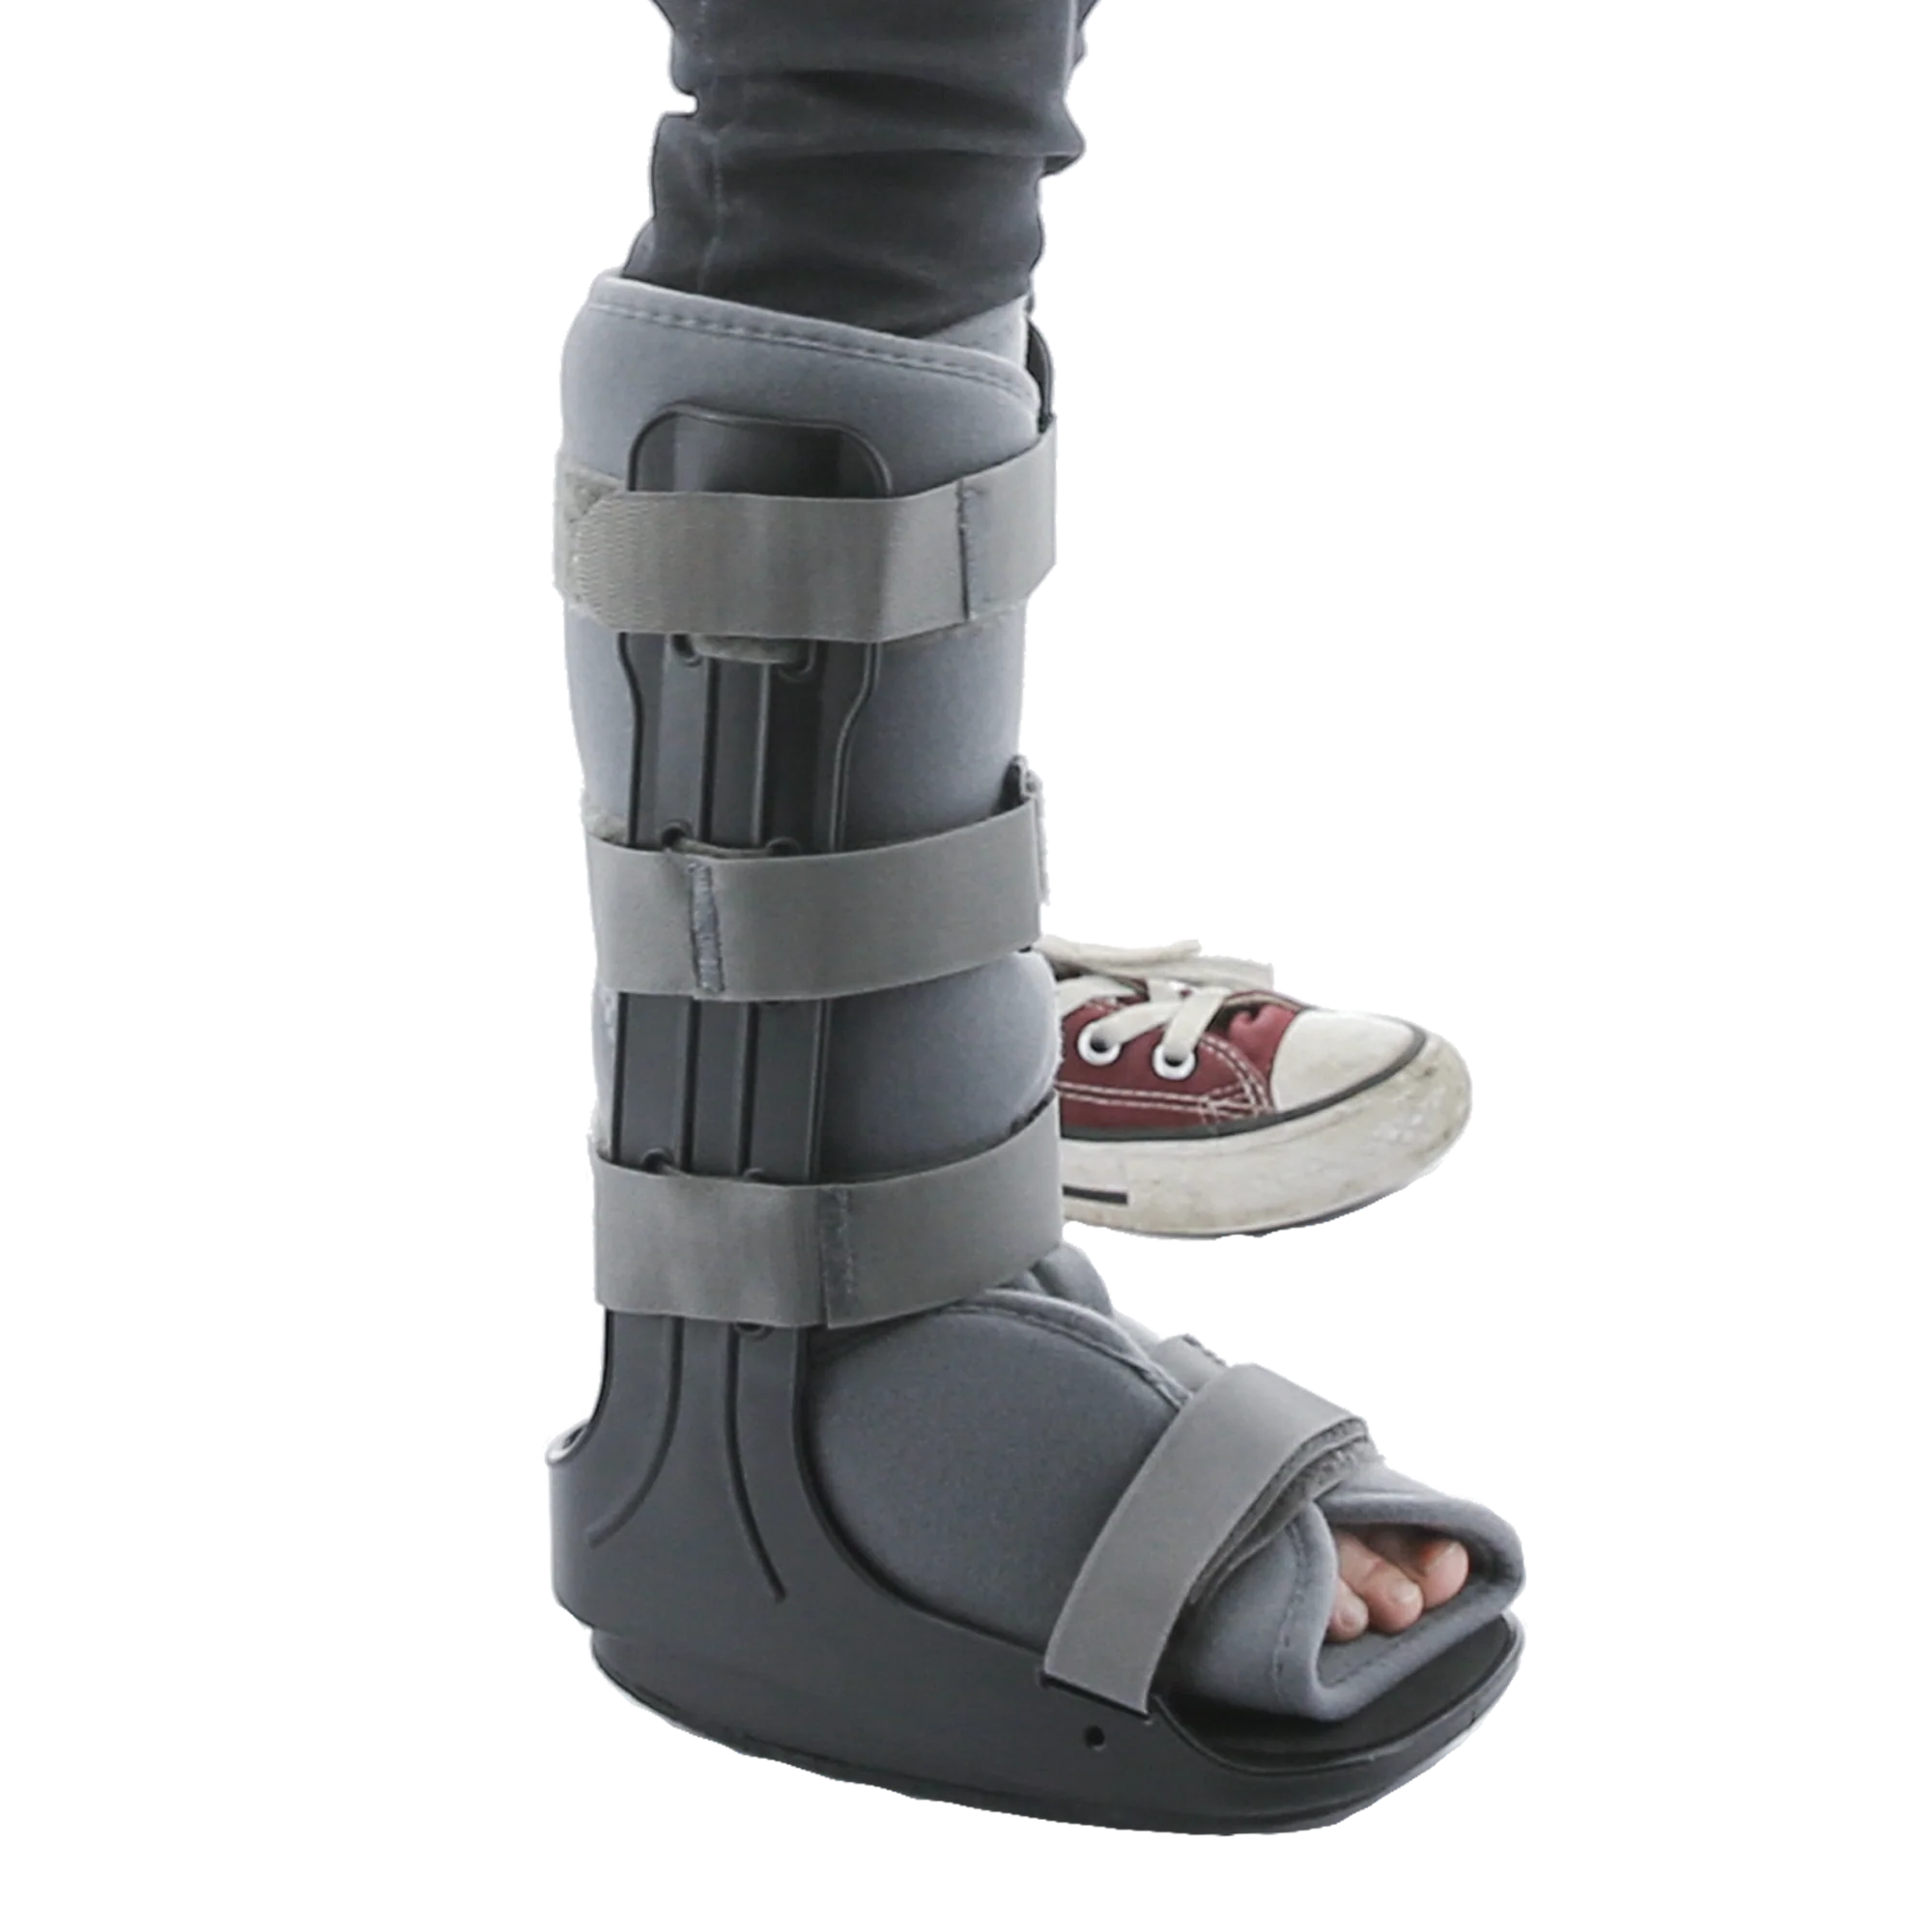 Pediatric Walking Boot